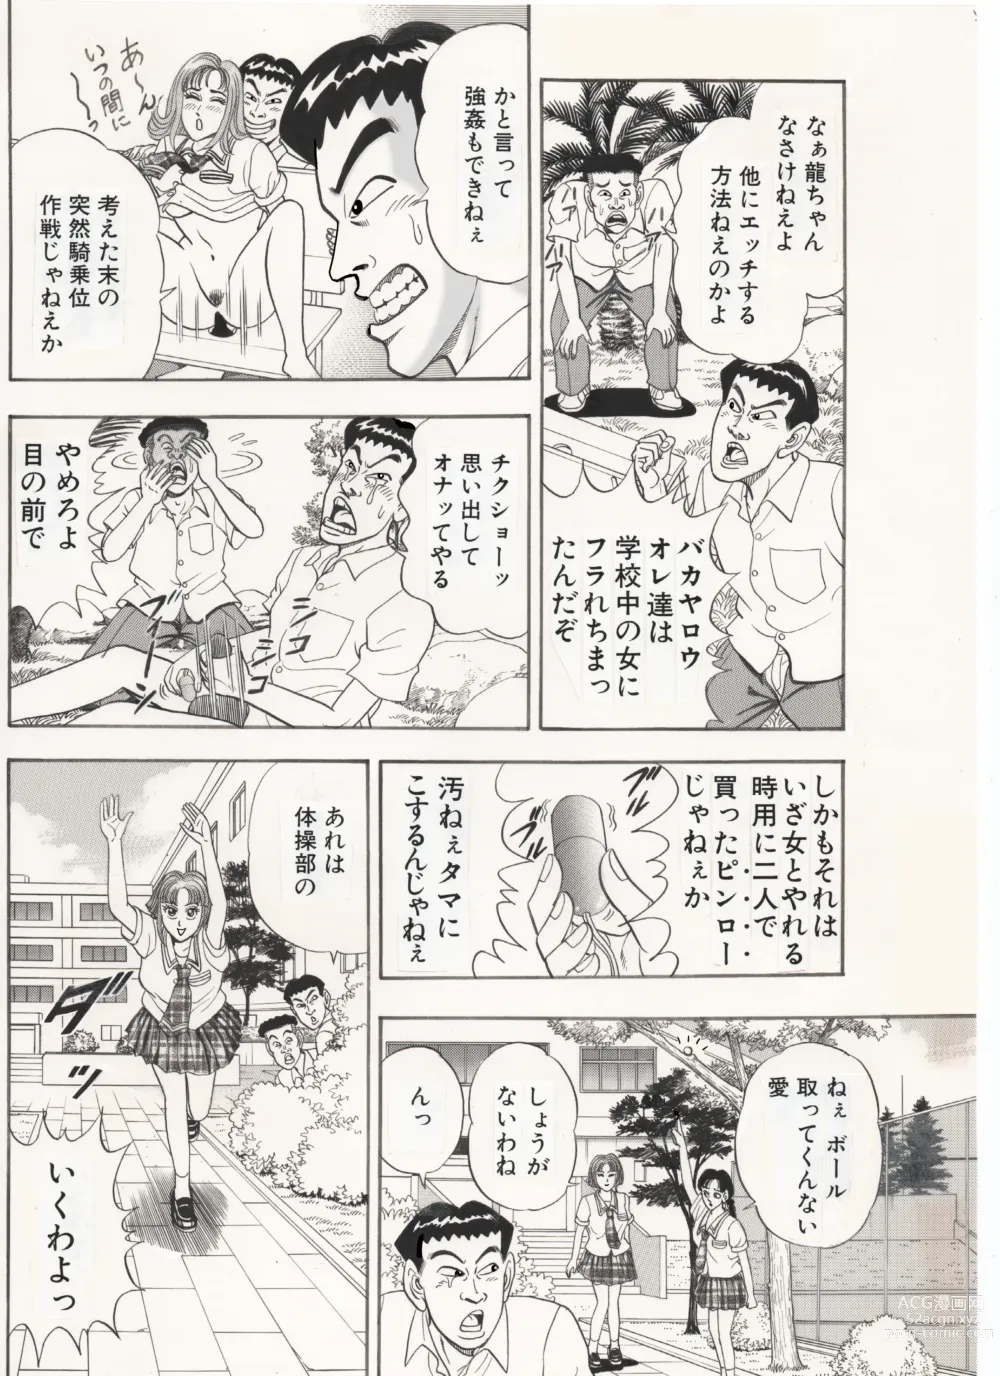 Page 4 of doujinshi Taisou Joshi… Midareru.